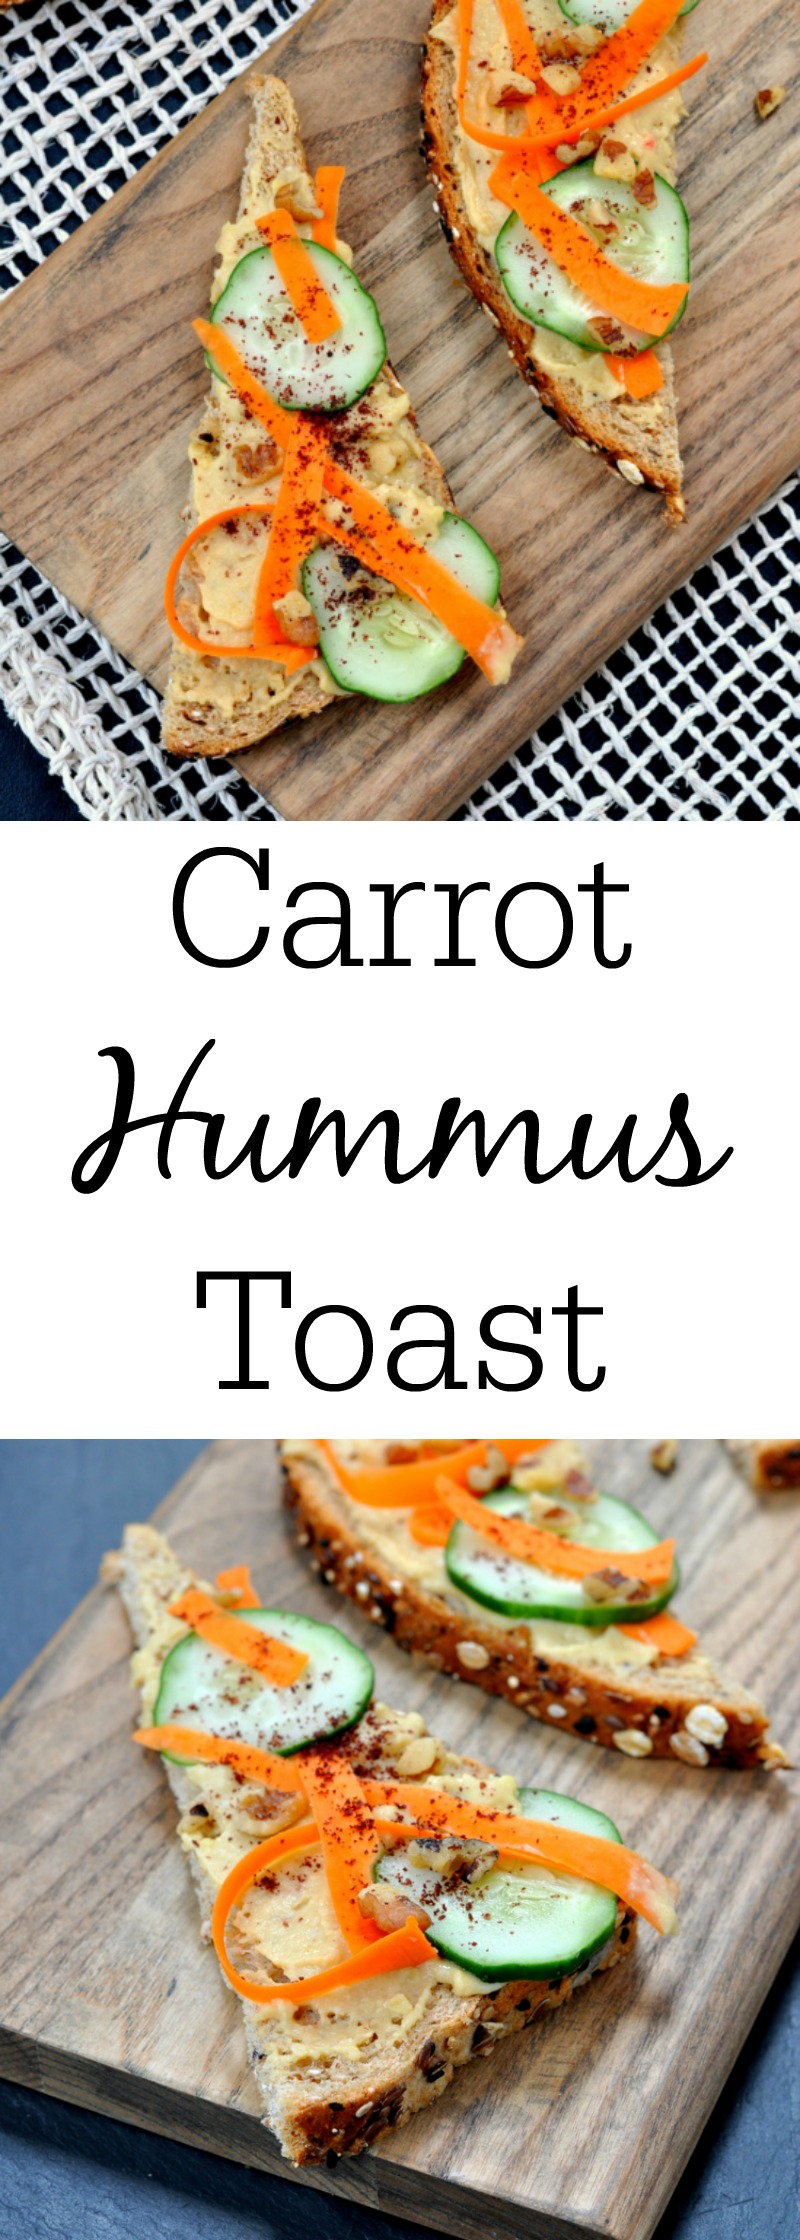 Carrot Hummus Toast